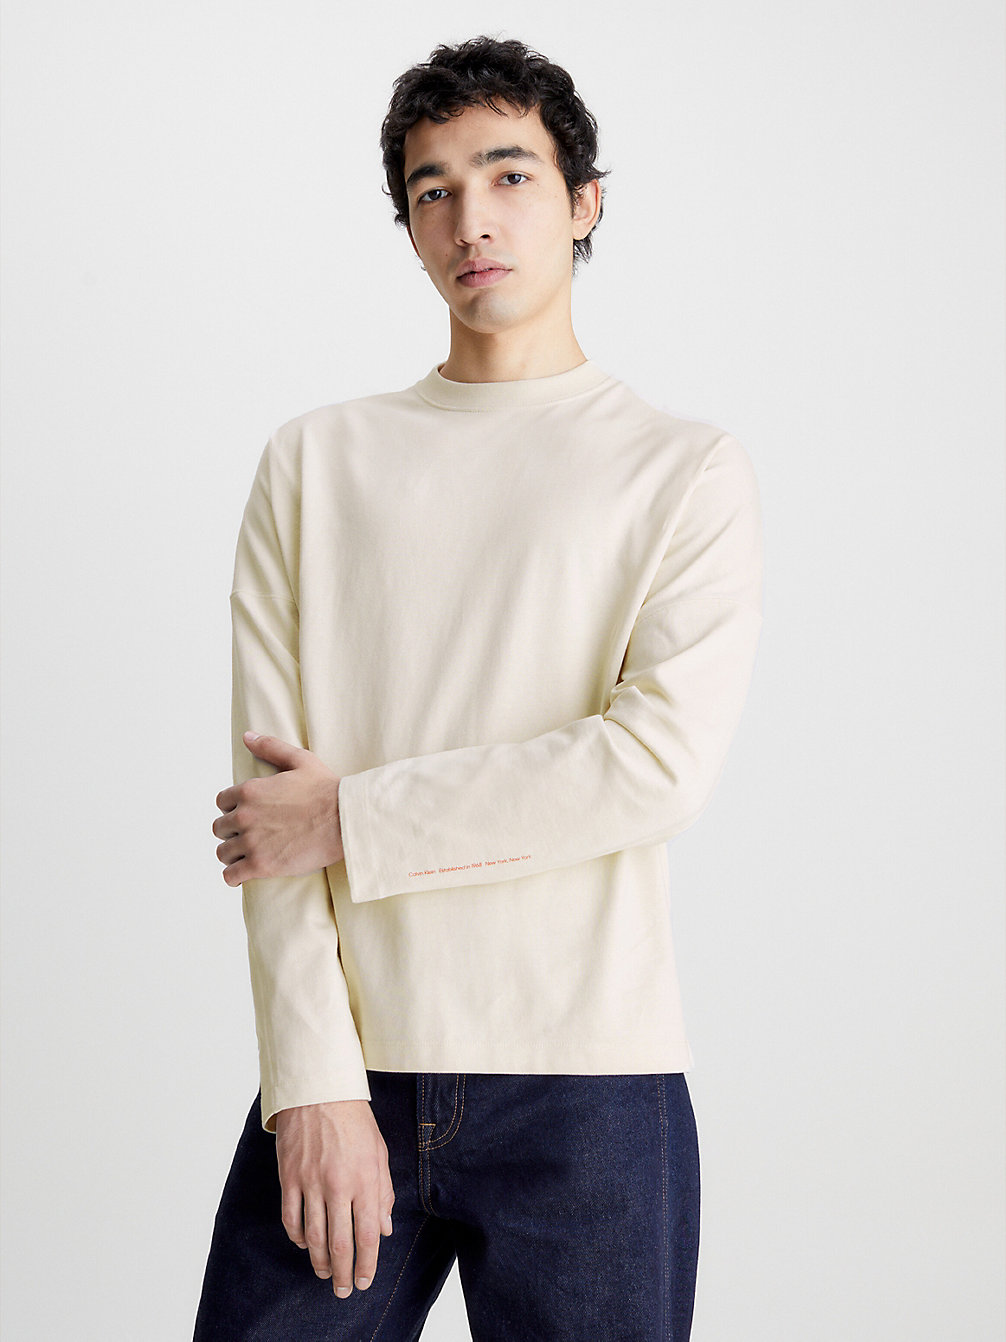 BONE WHITE Unisex Long Sleeve Printed T-Shirt - CK Standards undefined men Calvin Klein